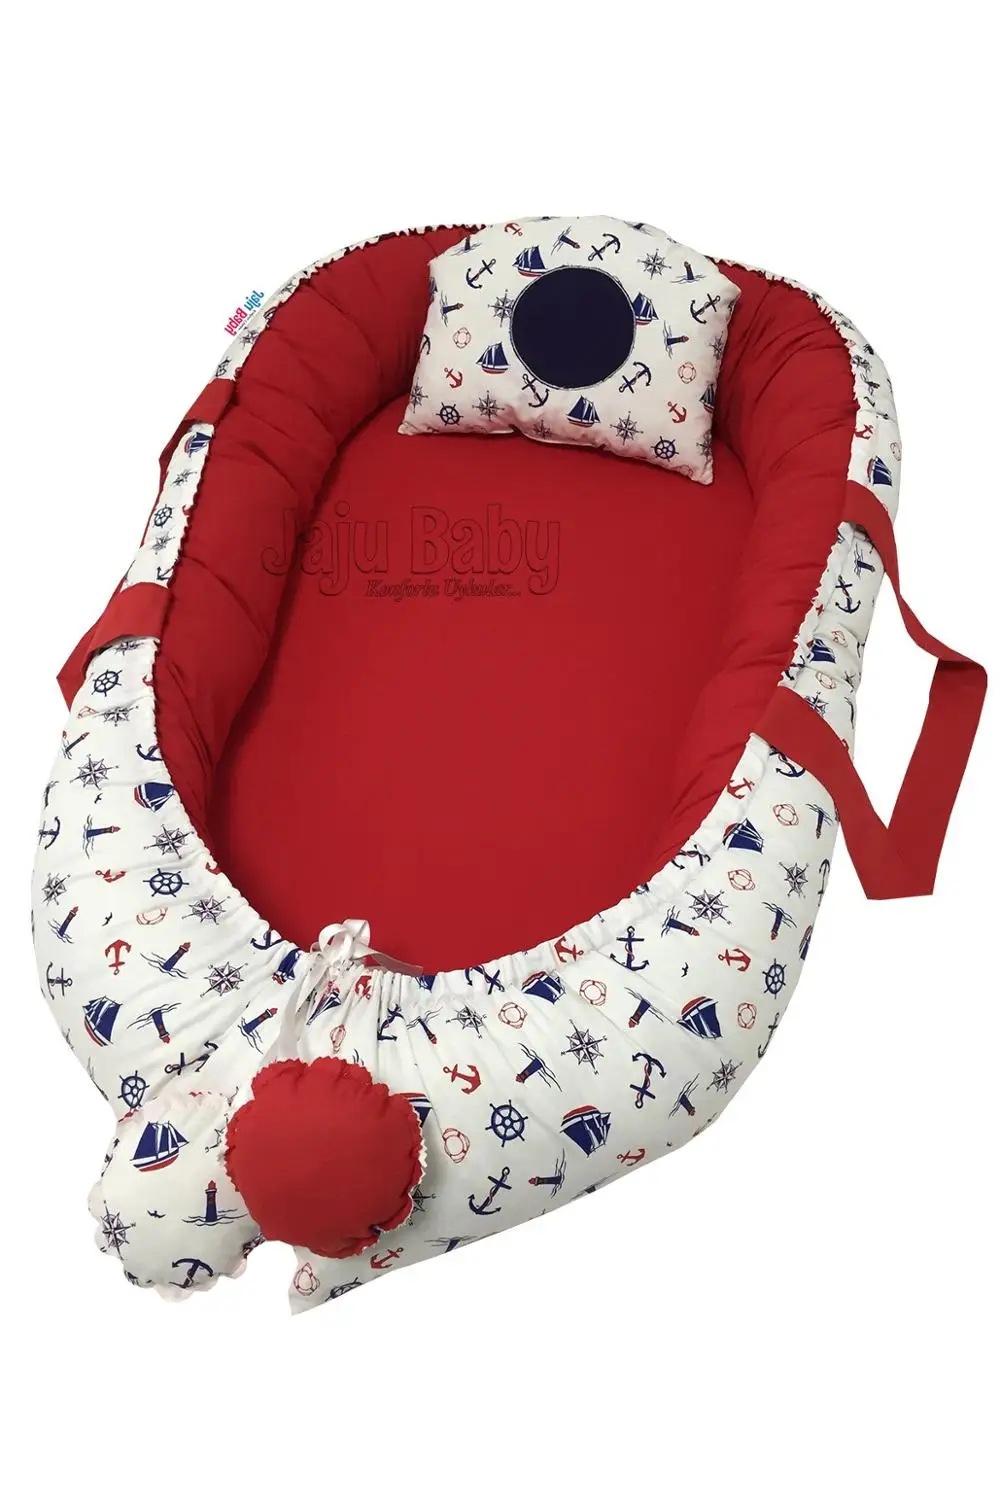 

Jaju Baby Handmade,100x60 Red Capped Design Orthopedic Luxury Babynest Maternal Bed Portable Crib Travel Bed Newborn Baby Bed